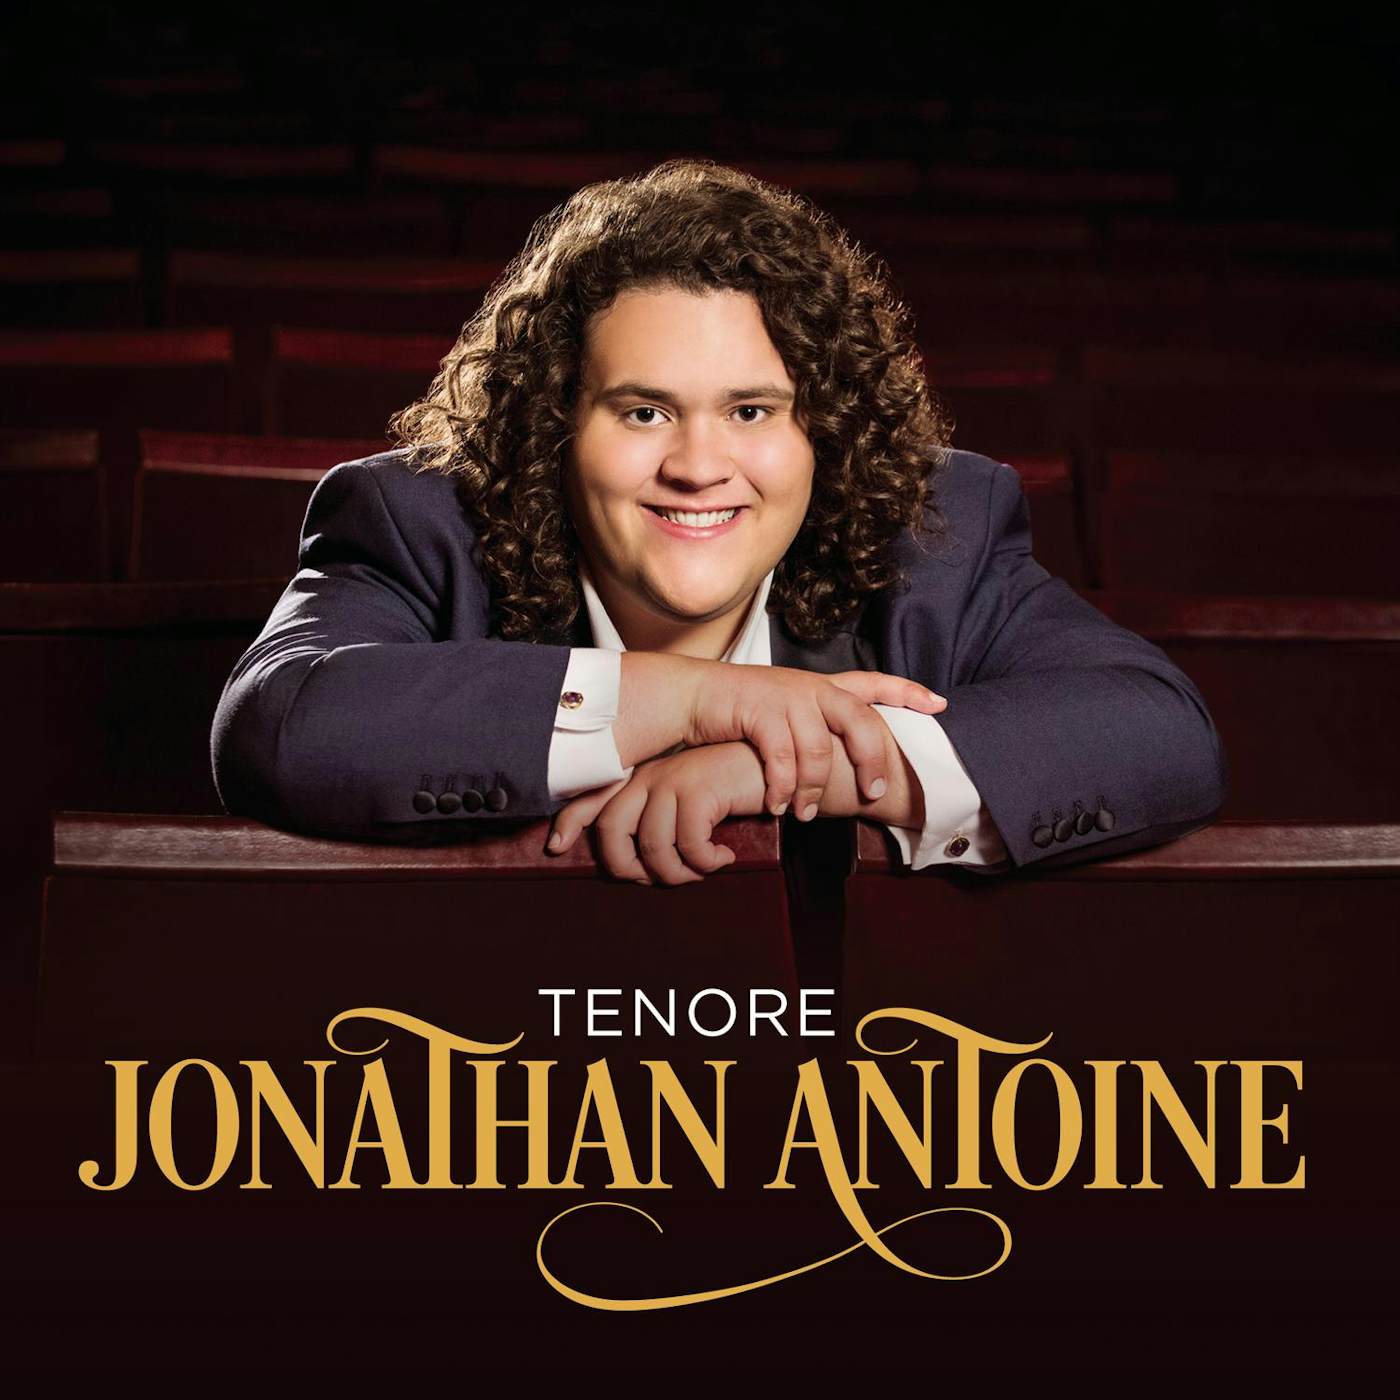 Jonathan Antoine TENORE CD